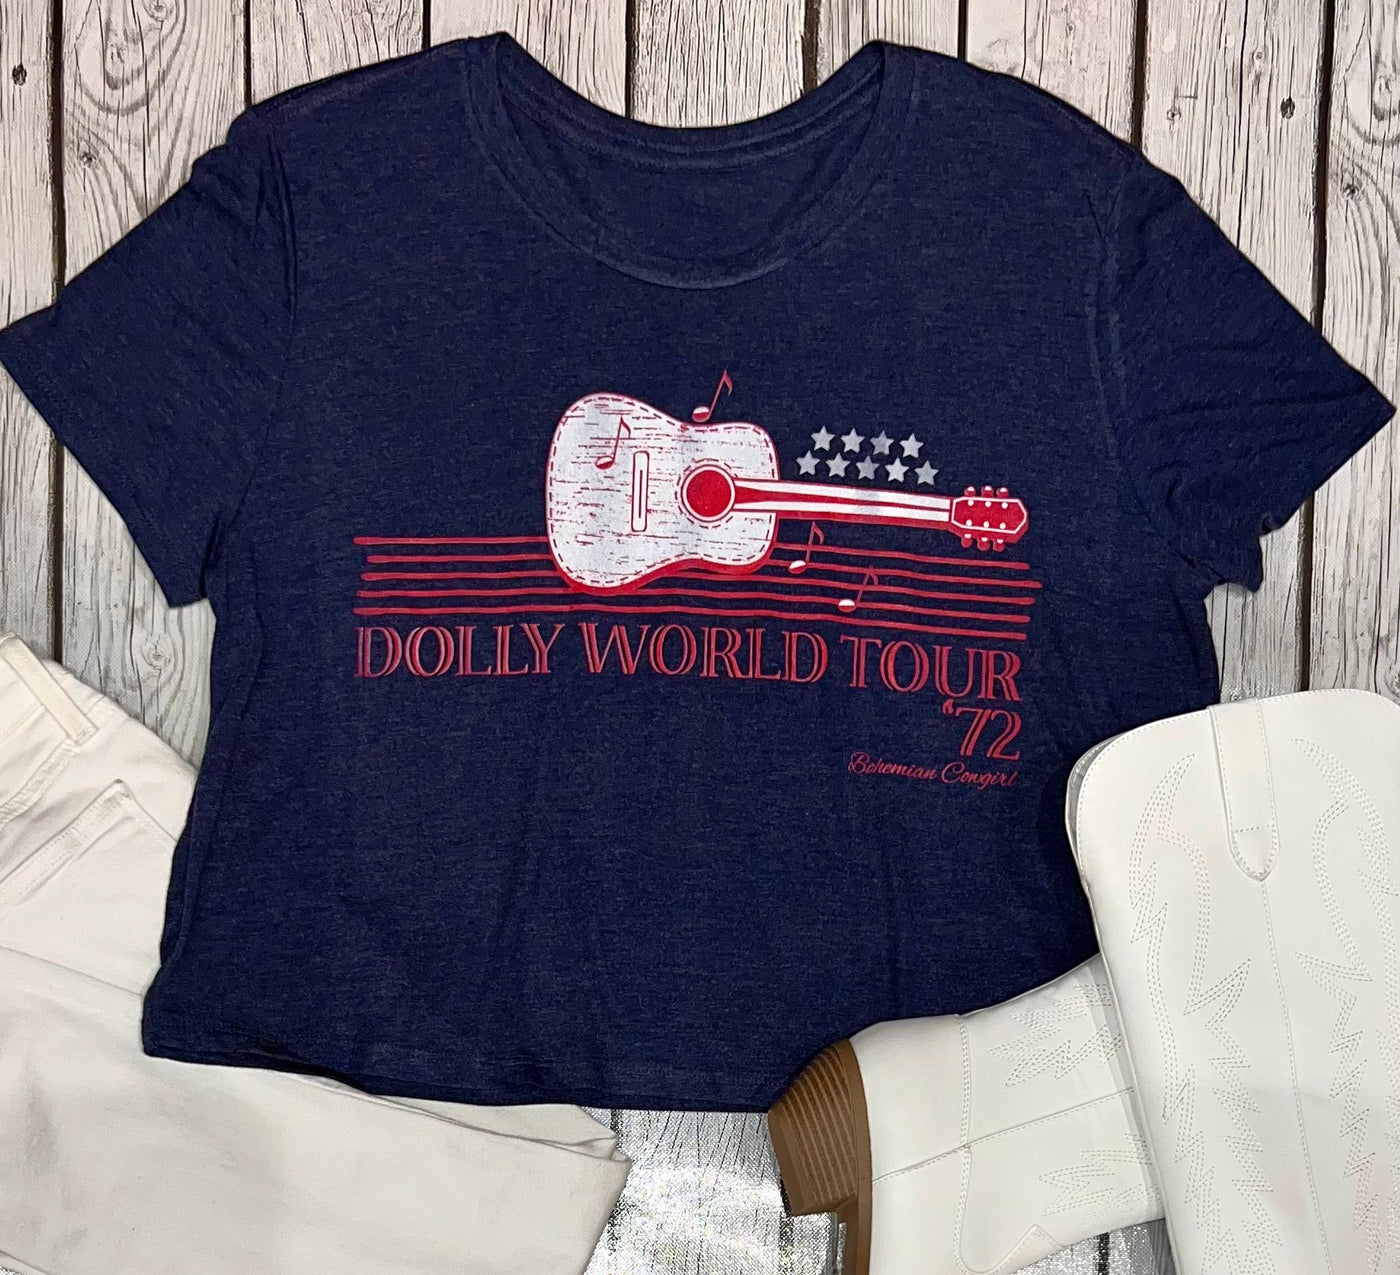 Dolly World Tour - Wholesale